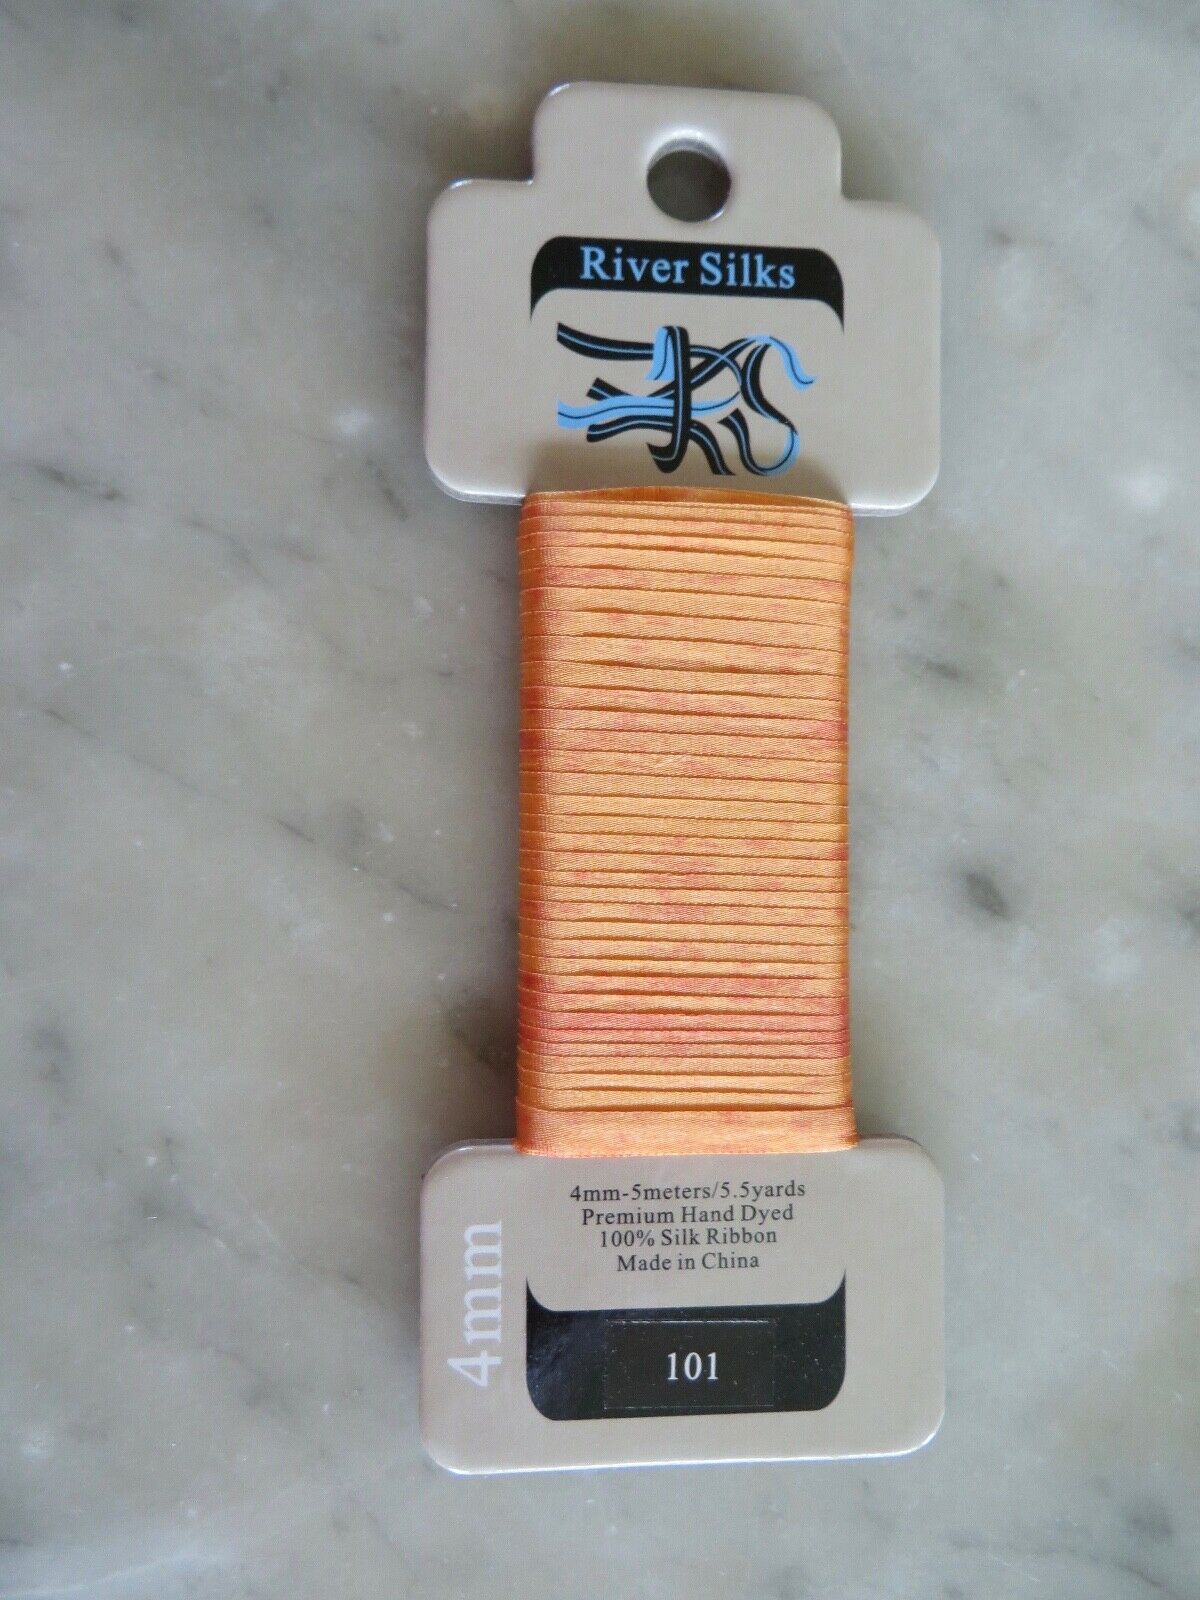 10% Off River Silks Hand-dyed 100% Silk Ribbon 5.5 yard Cards